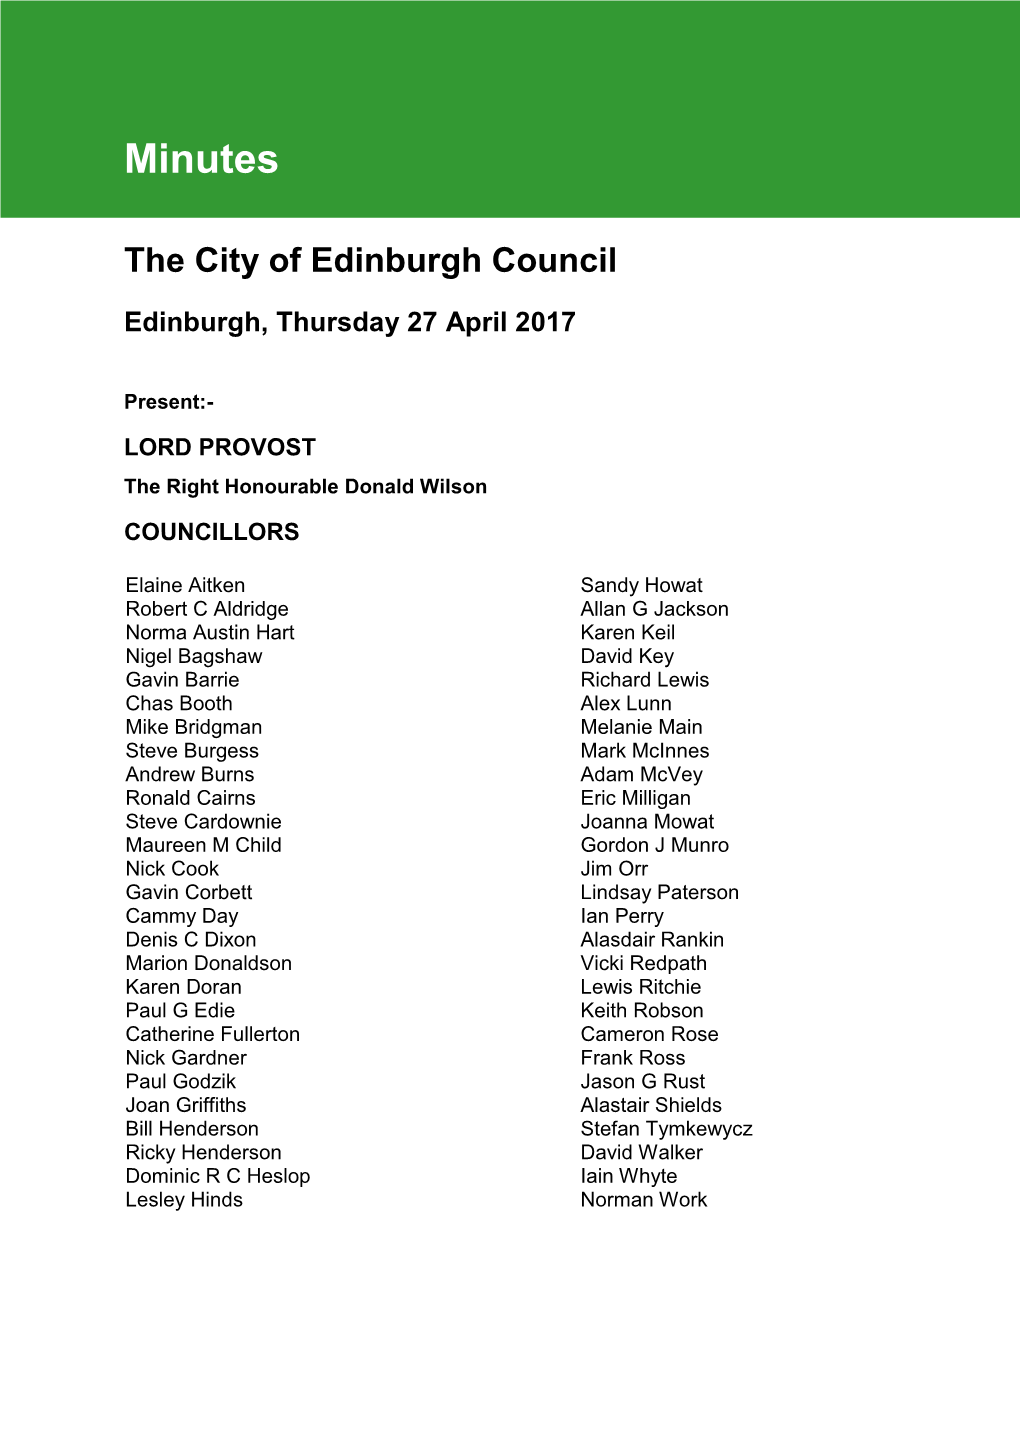 Minutes the City of Edinburgh Council